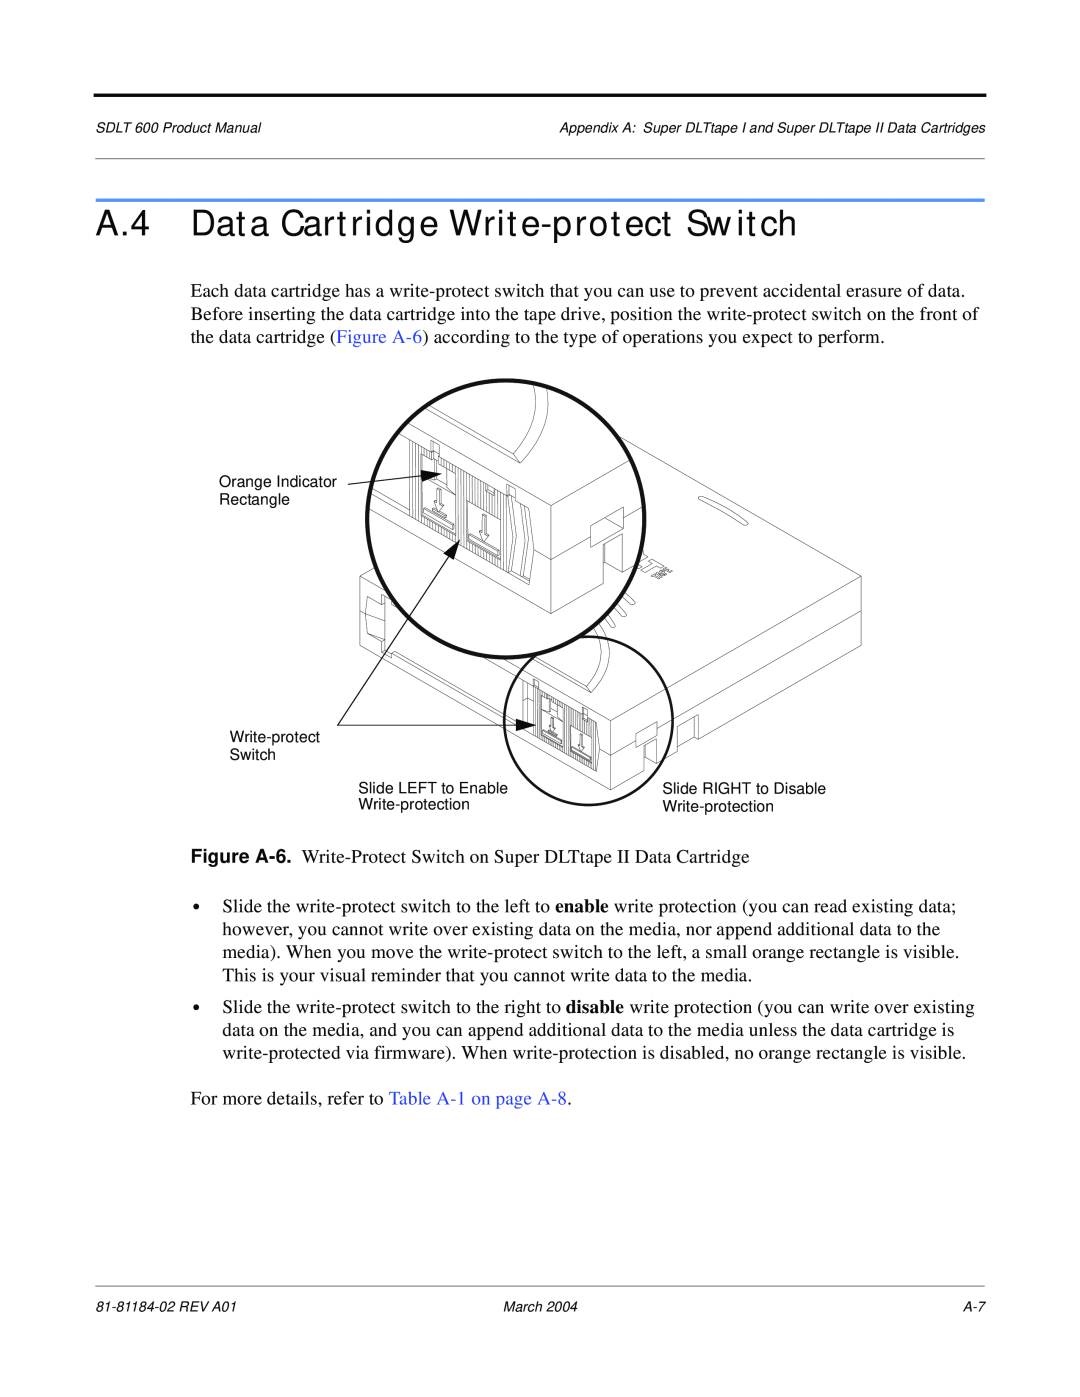 Tandberg Data 600 manual A.4 Data Cartridge Write-protect Switch 